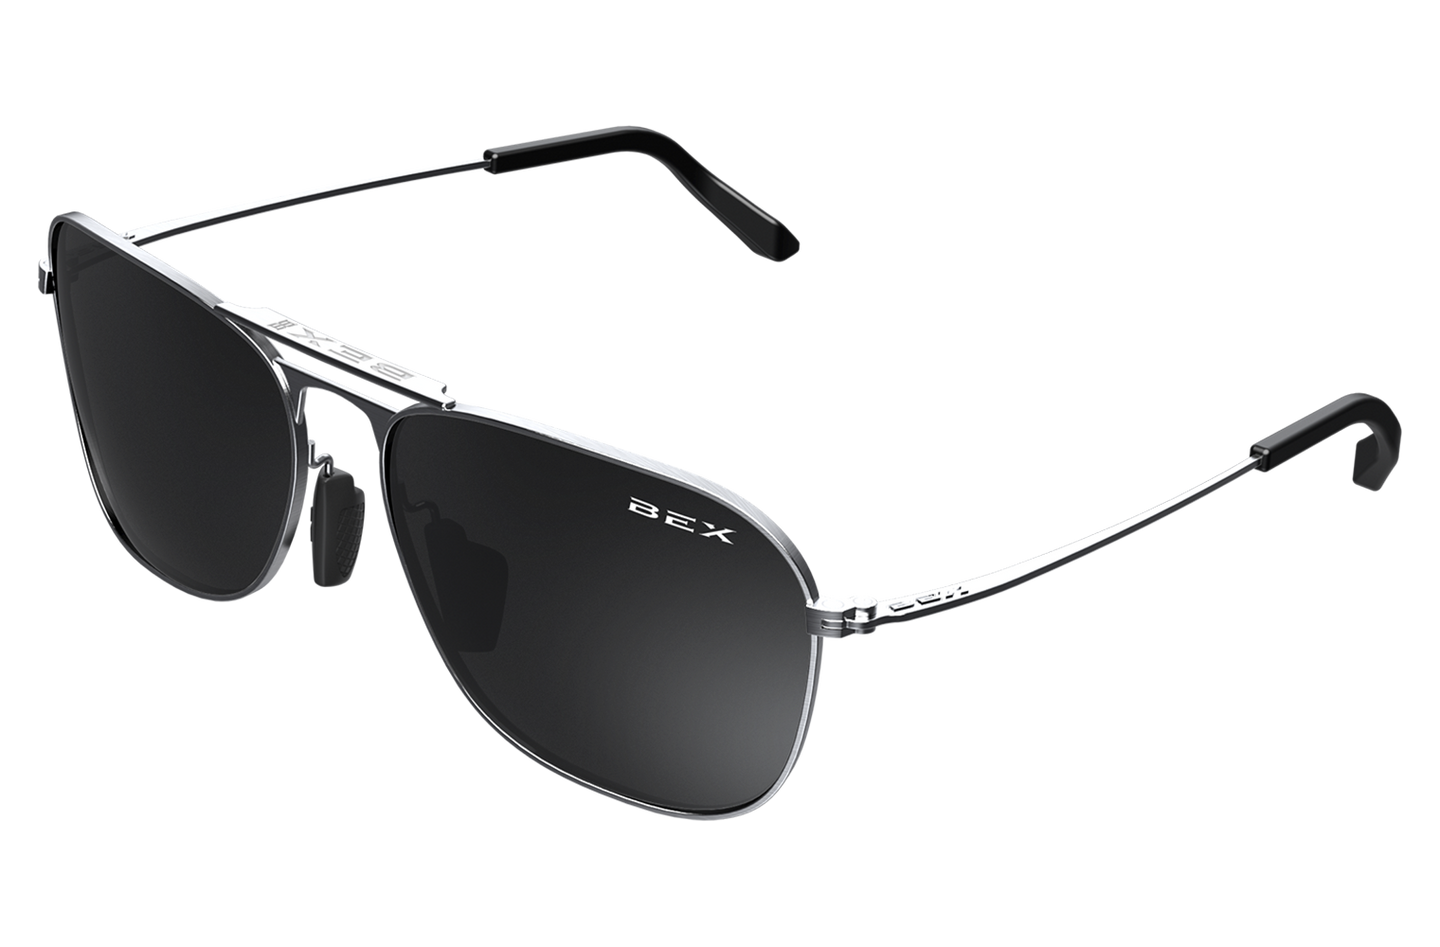 Bex Sunglasses - Ranger (Silver/Gray)